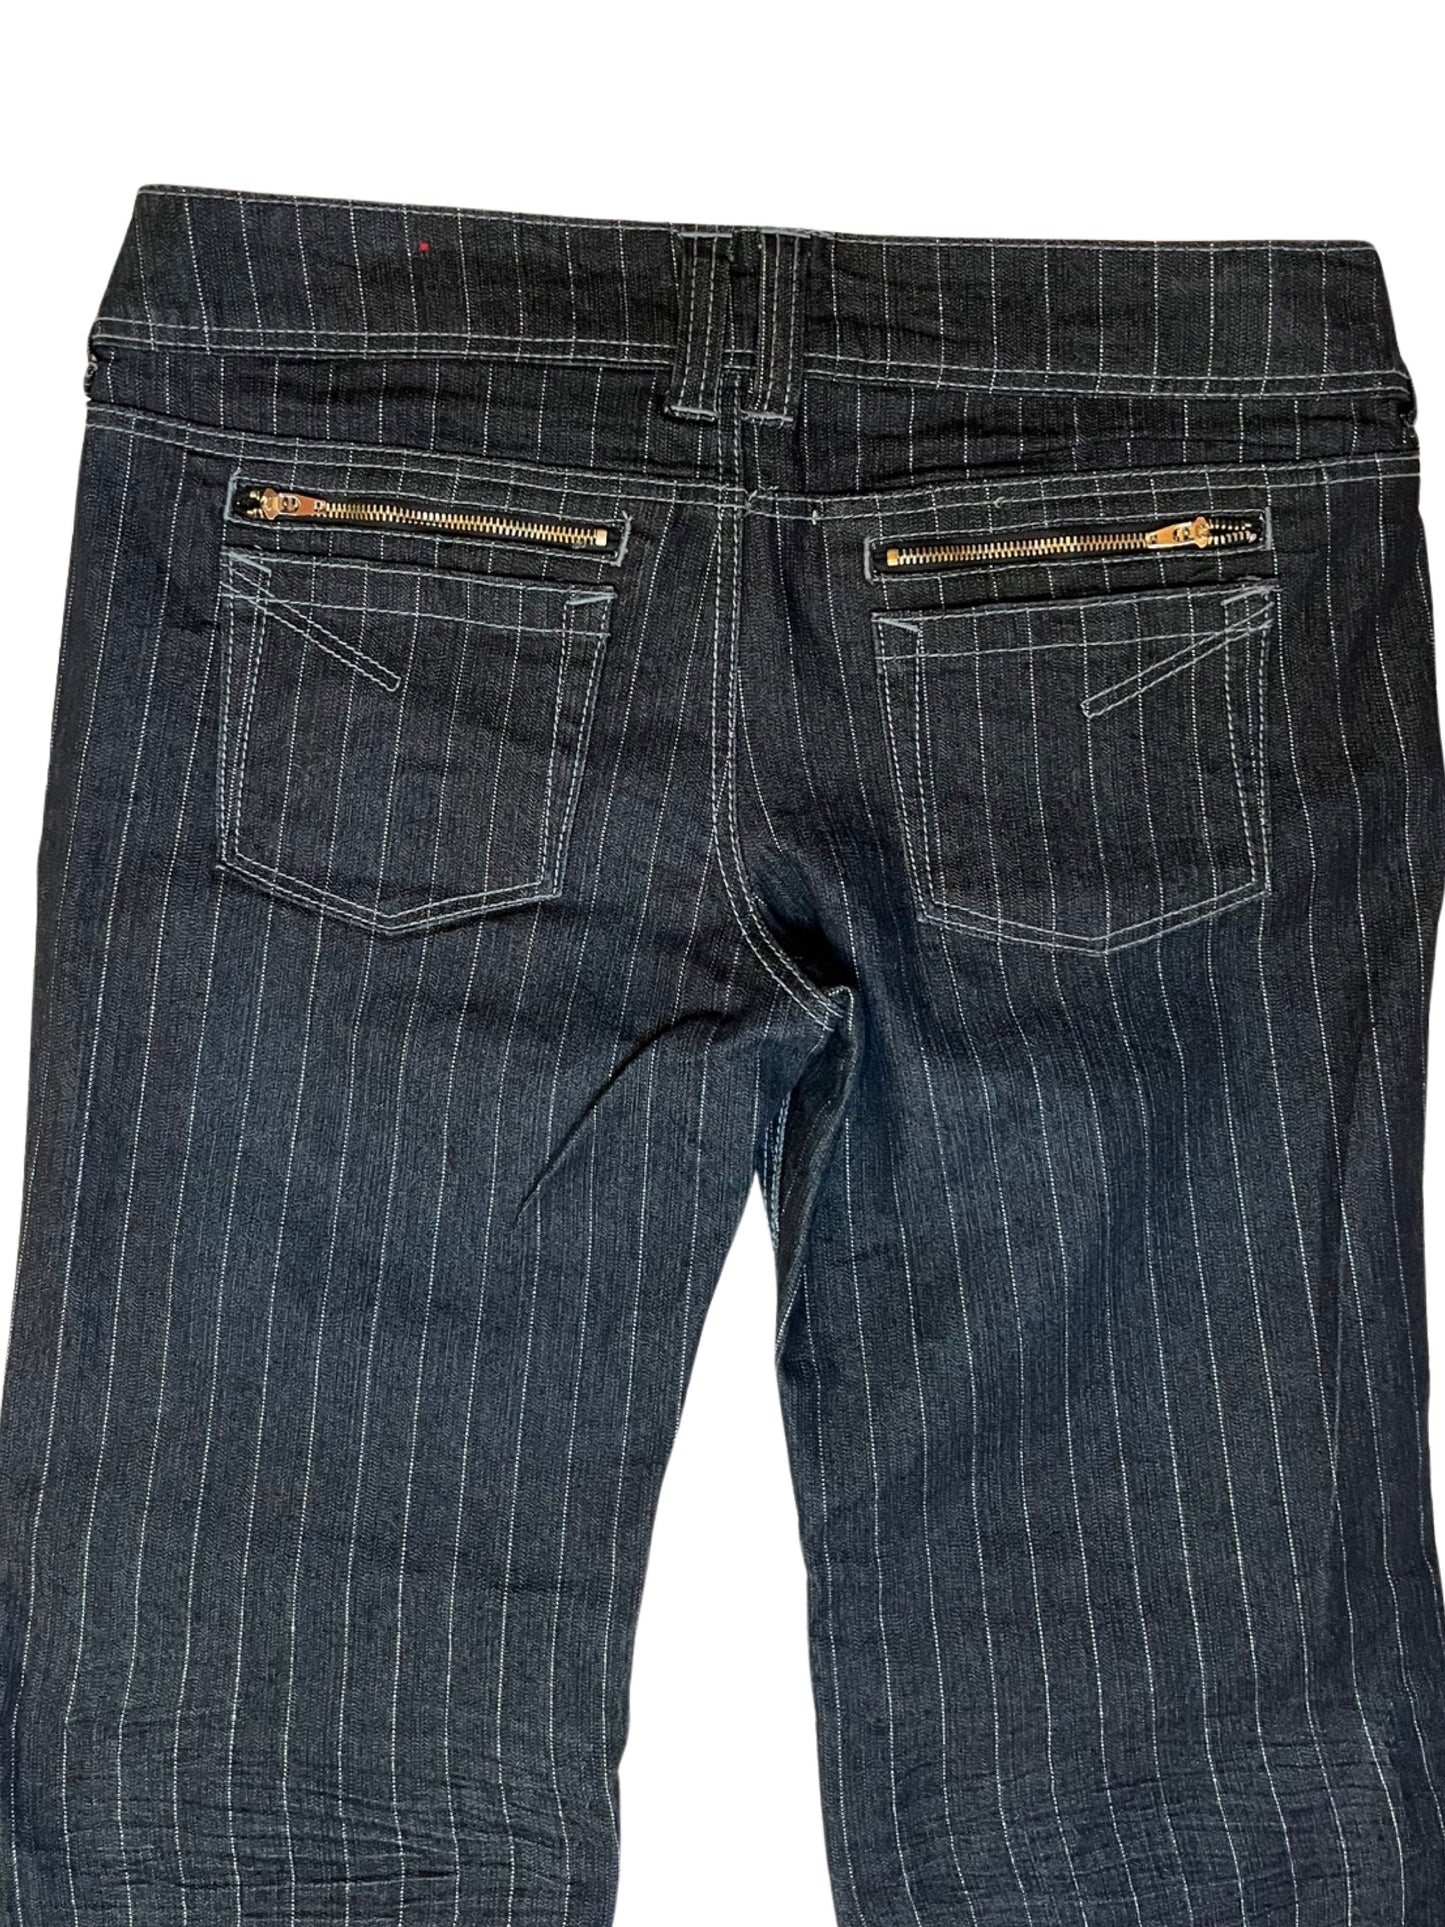 Low Rise Metallic Stripe Denim Pants